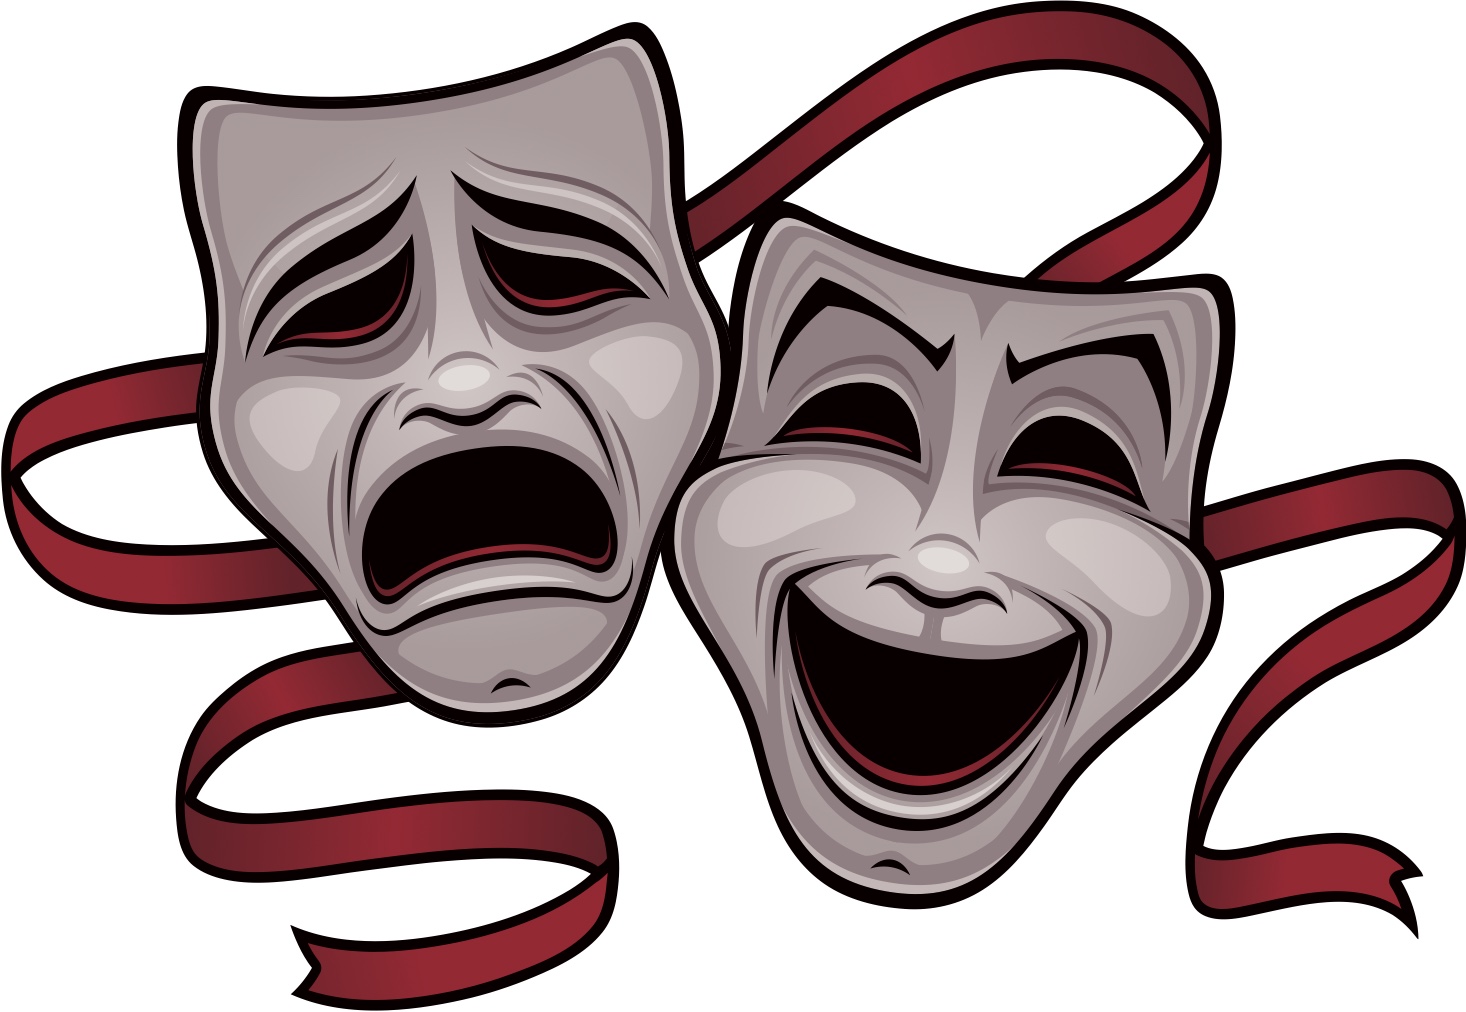 Comedy Tragedy Masks